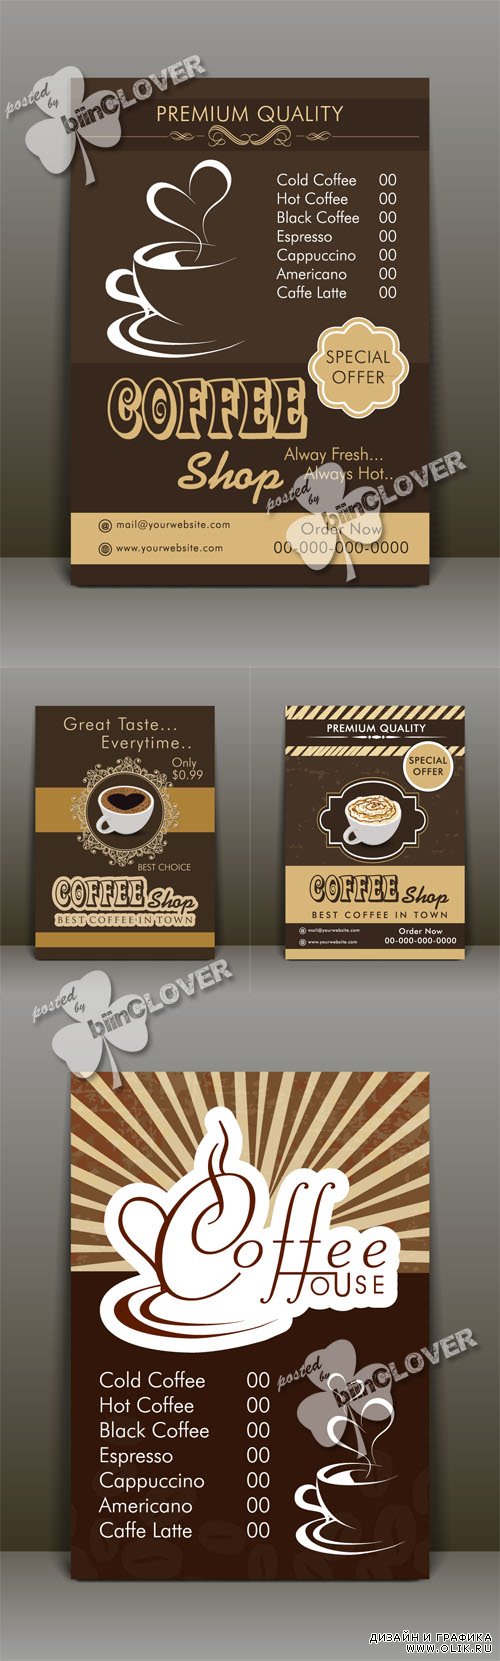 Coffee cards design 0493